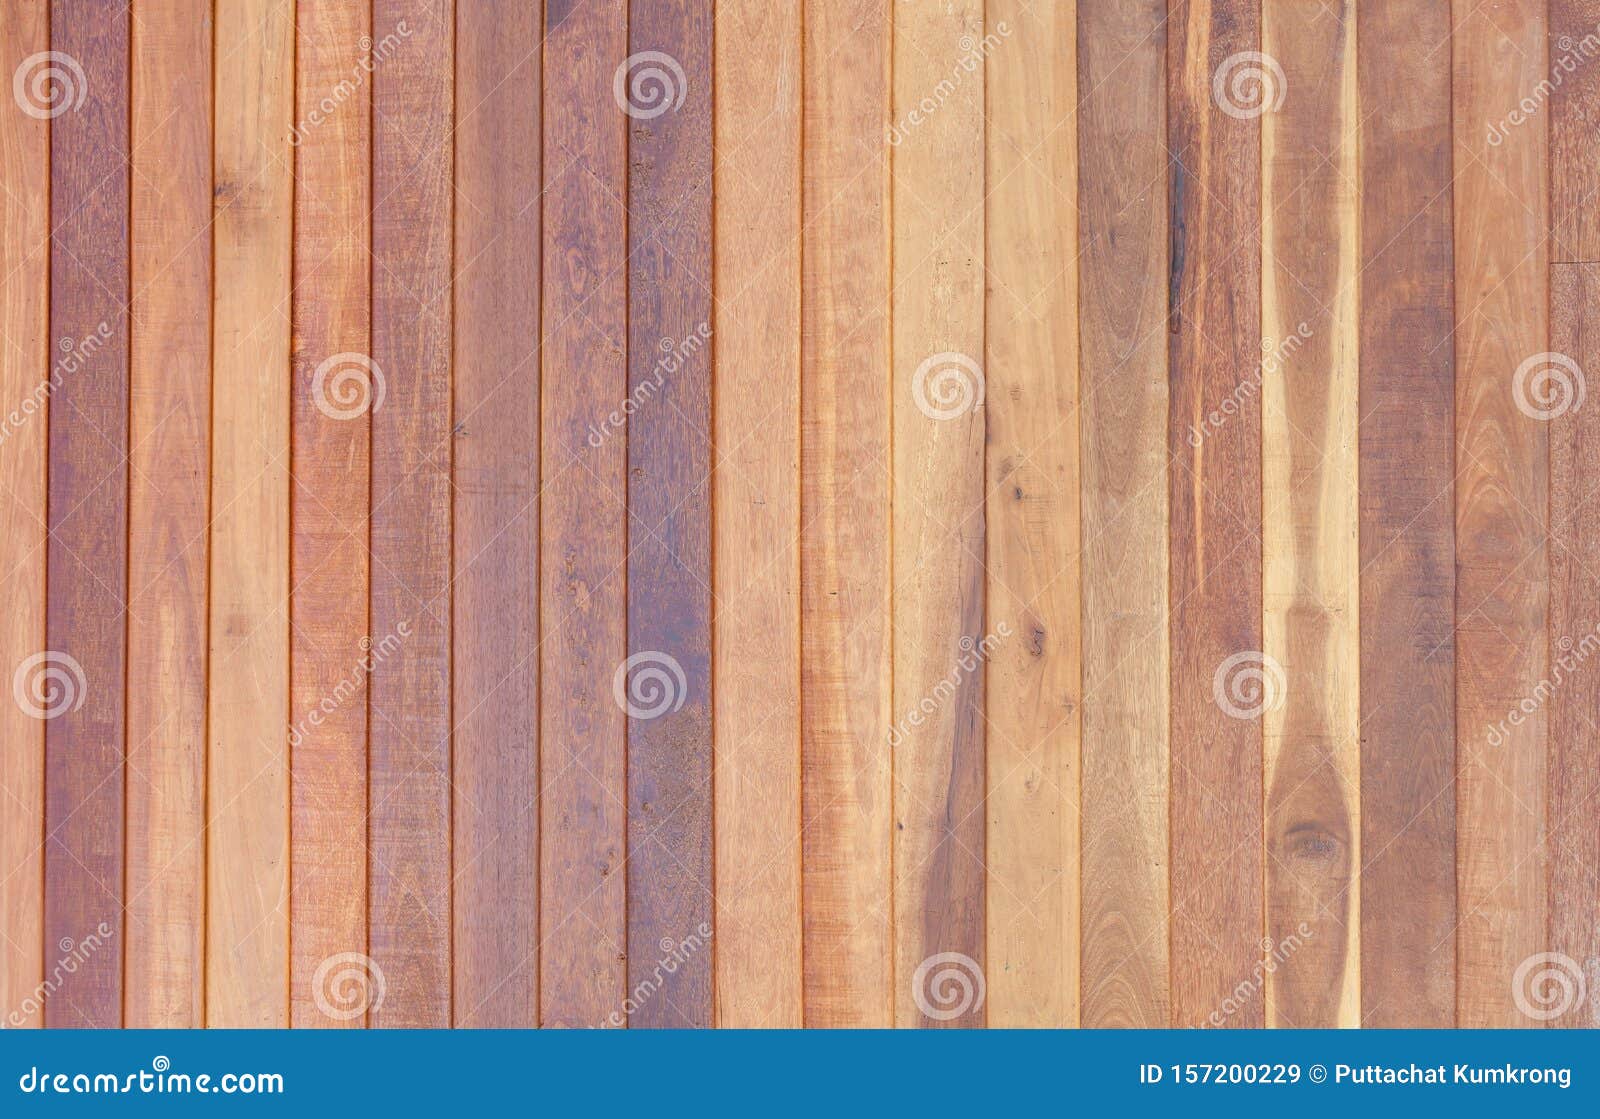 seamless wood floor texture, hardwood floor texture